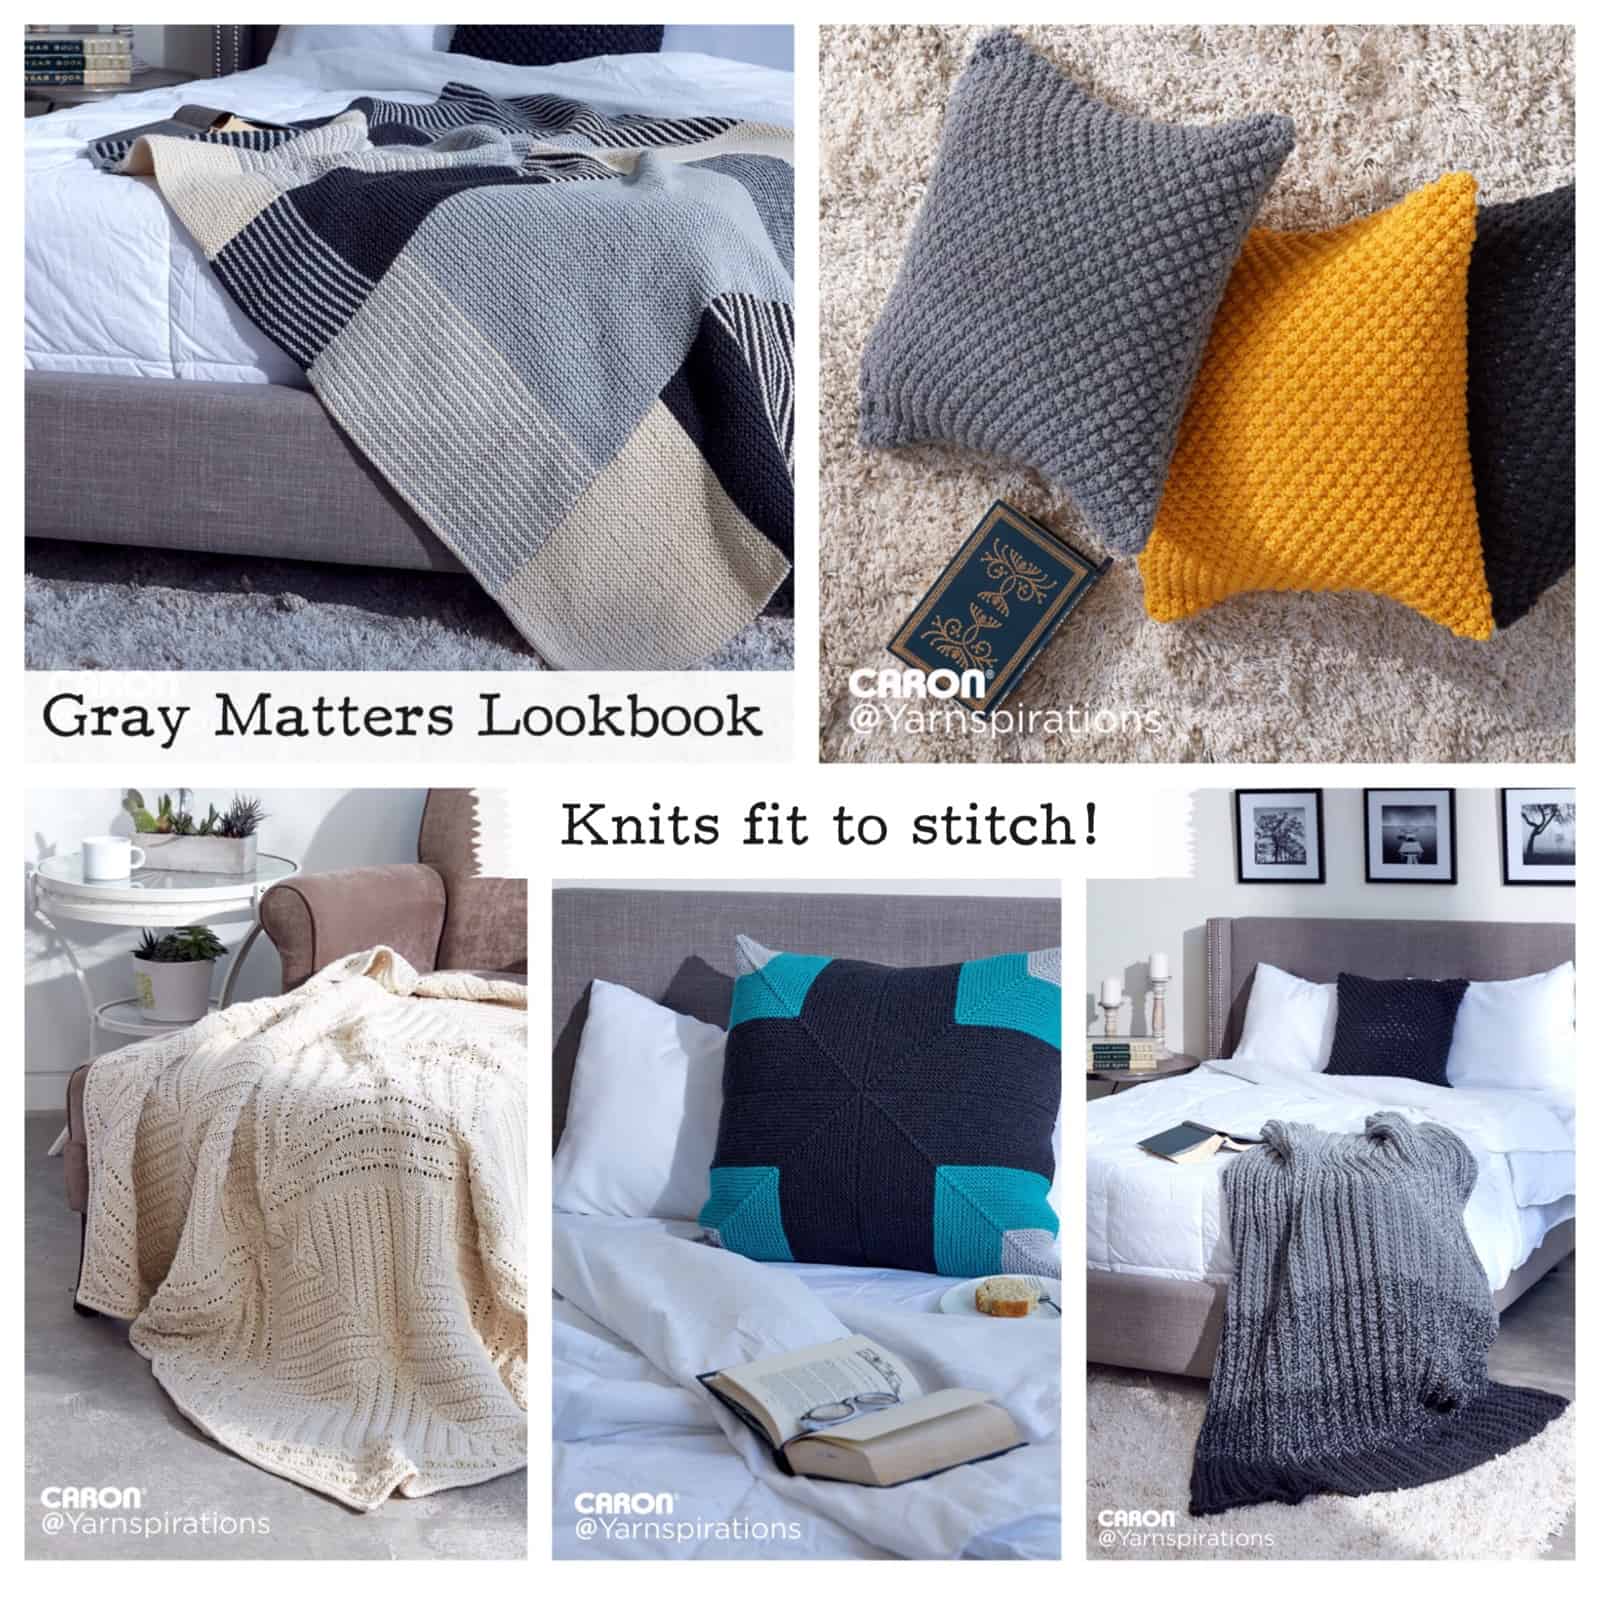 Gray Matters Lookbook by Yarnspirations